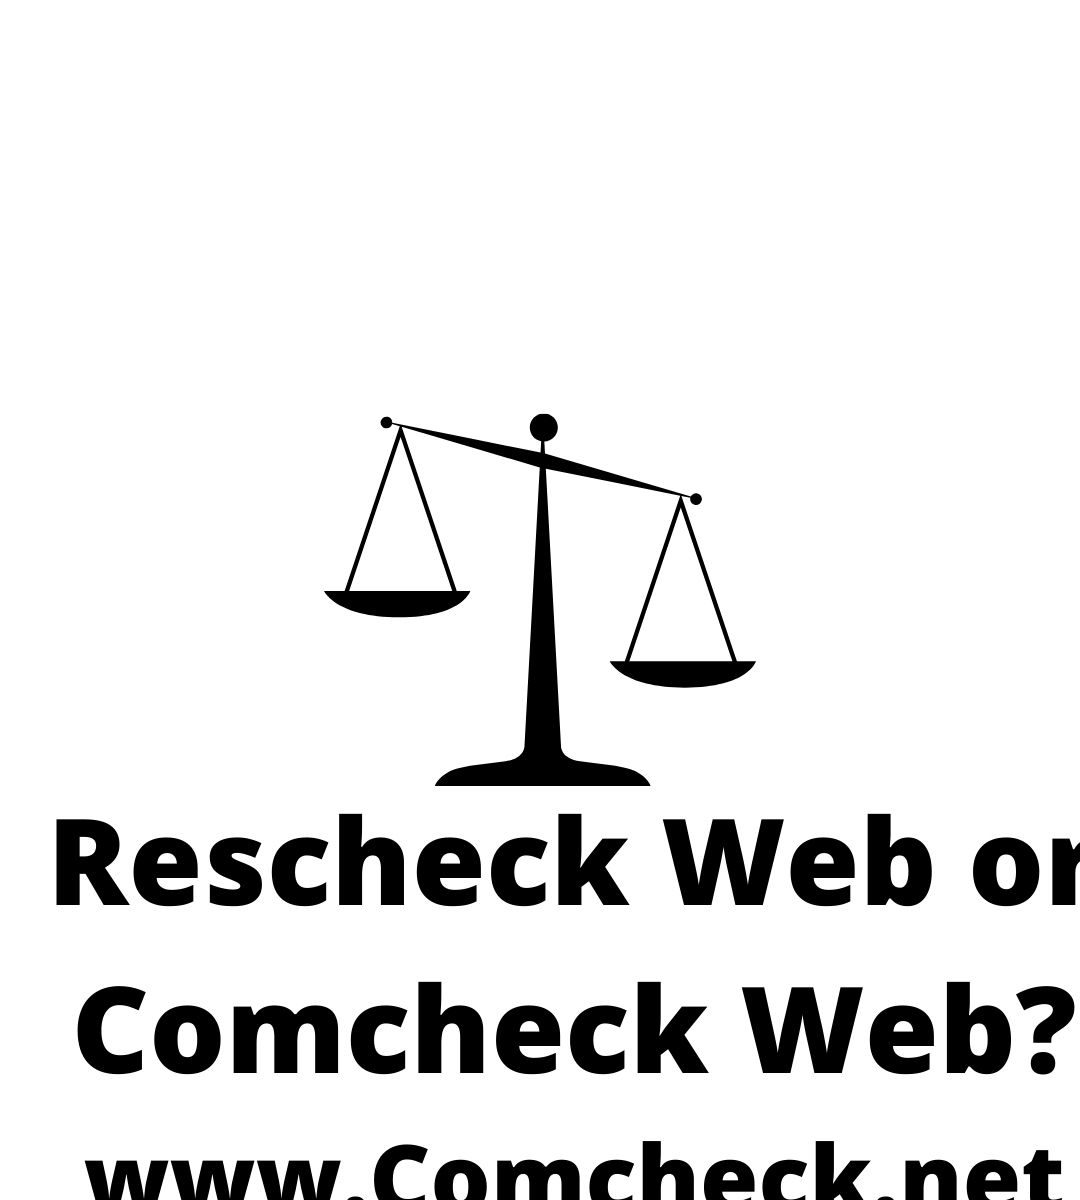 Why Comcheck Web is Better than Rescheck Web